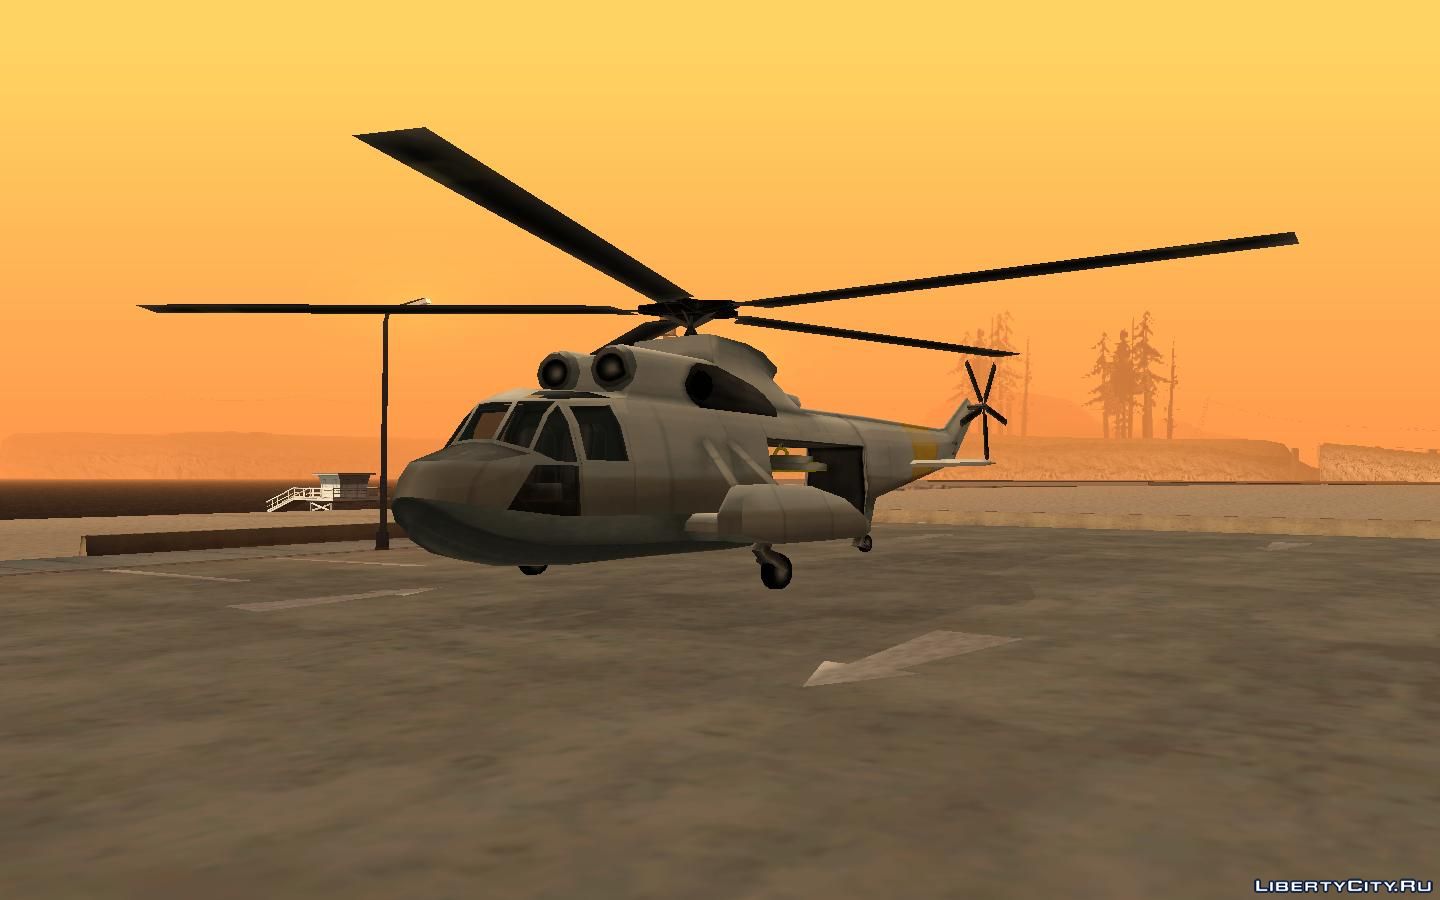 Гта мод вертолет. GTA San Andreas вертолет. Вертолет ГТА Сан андреас. Grand Theft auto: San Andreas - вертолёт. Вертолет из GTA San Andreas.